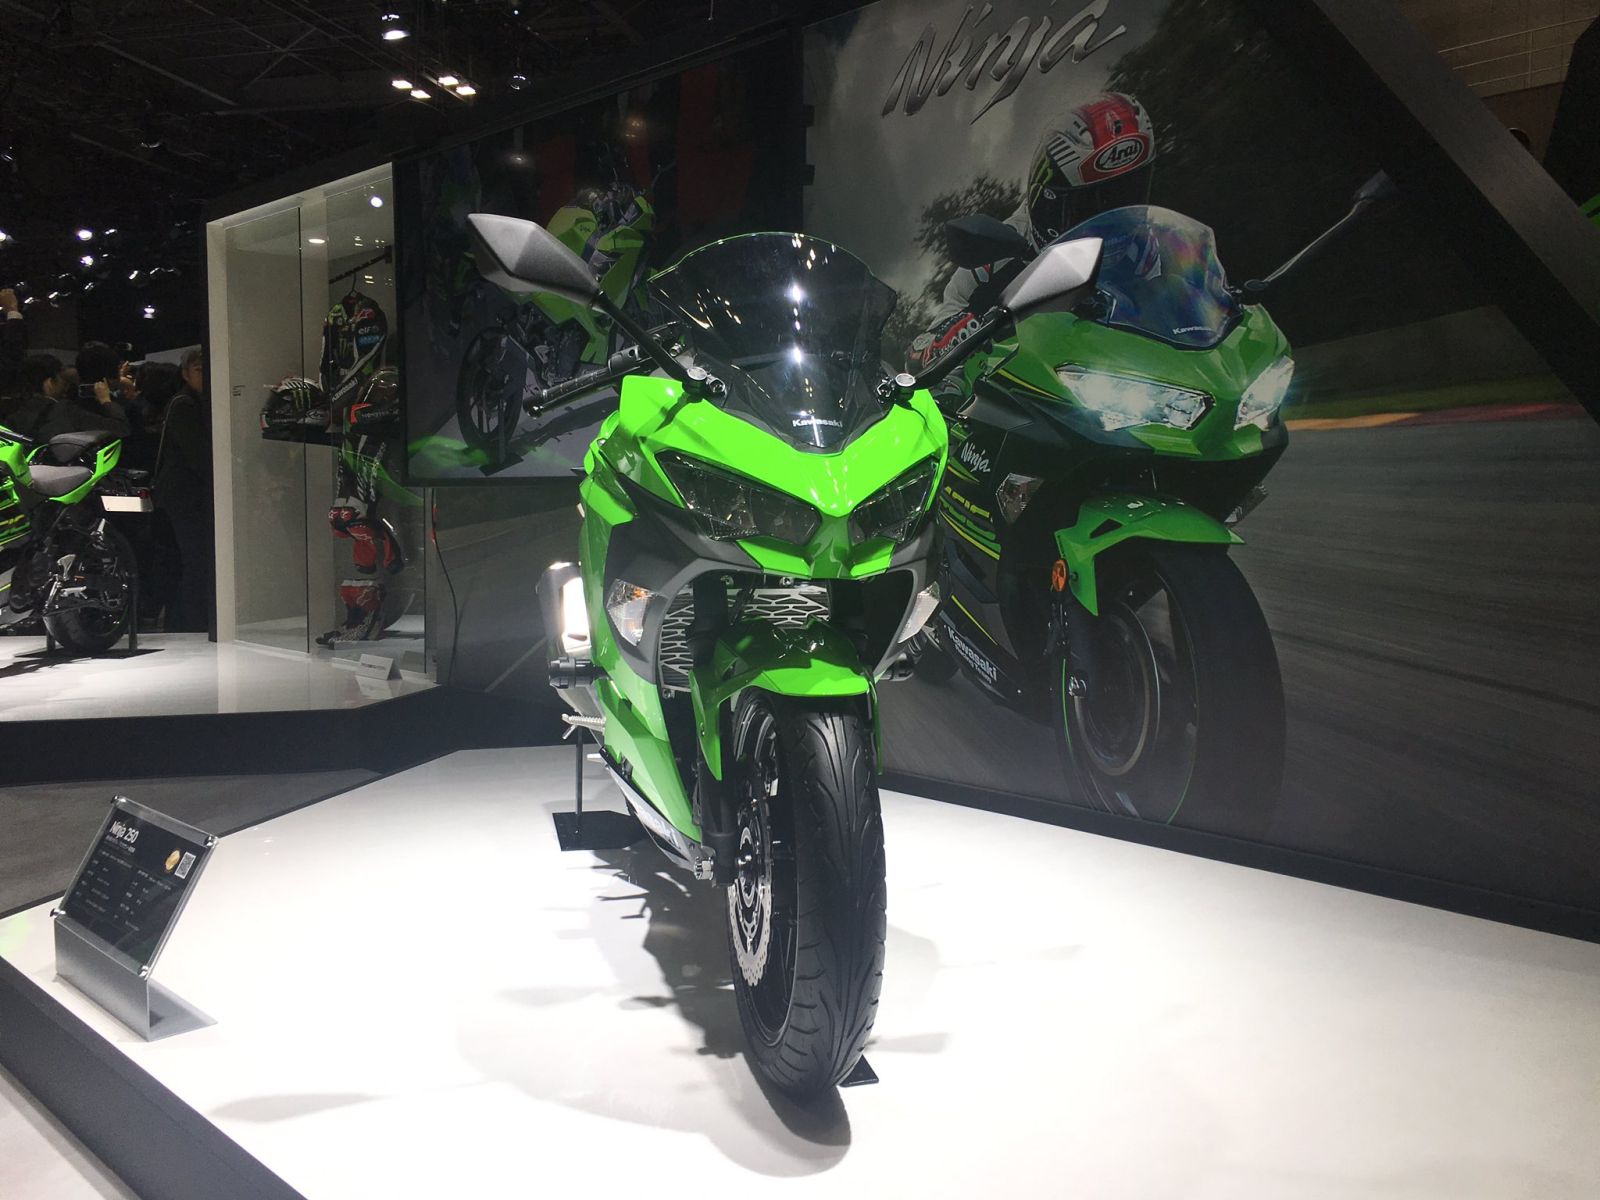 2018 Kawasaki Ninja 250 Features, Tech Specs All You Need To | Motoroids